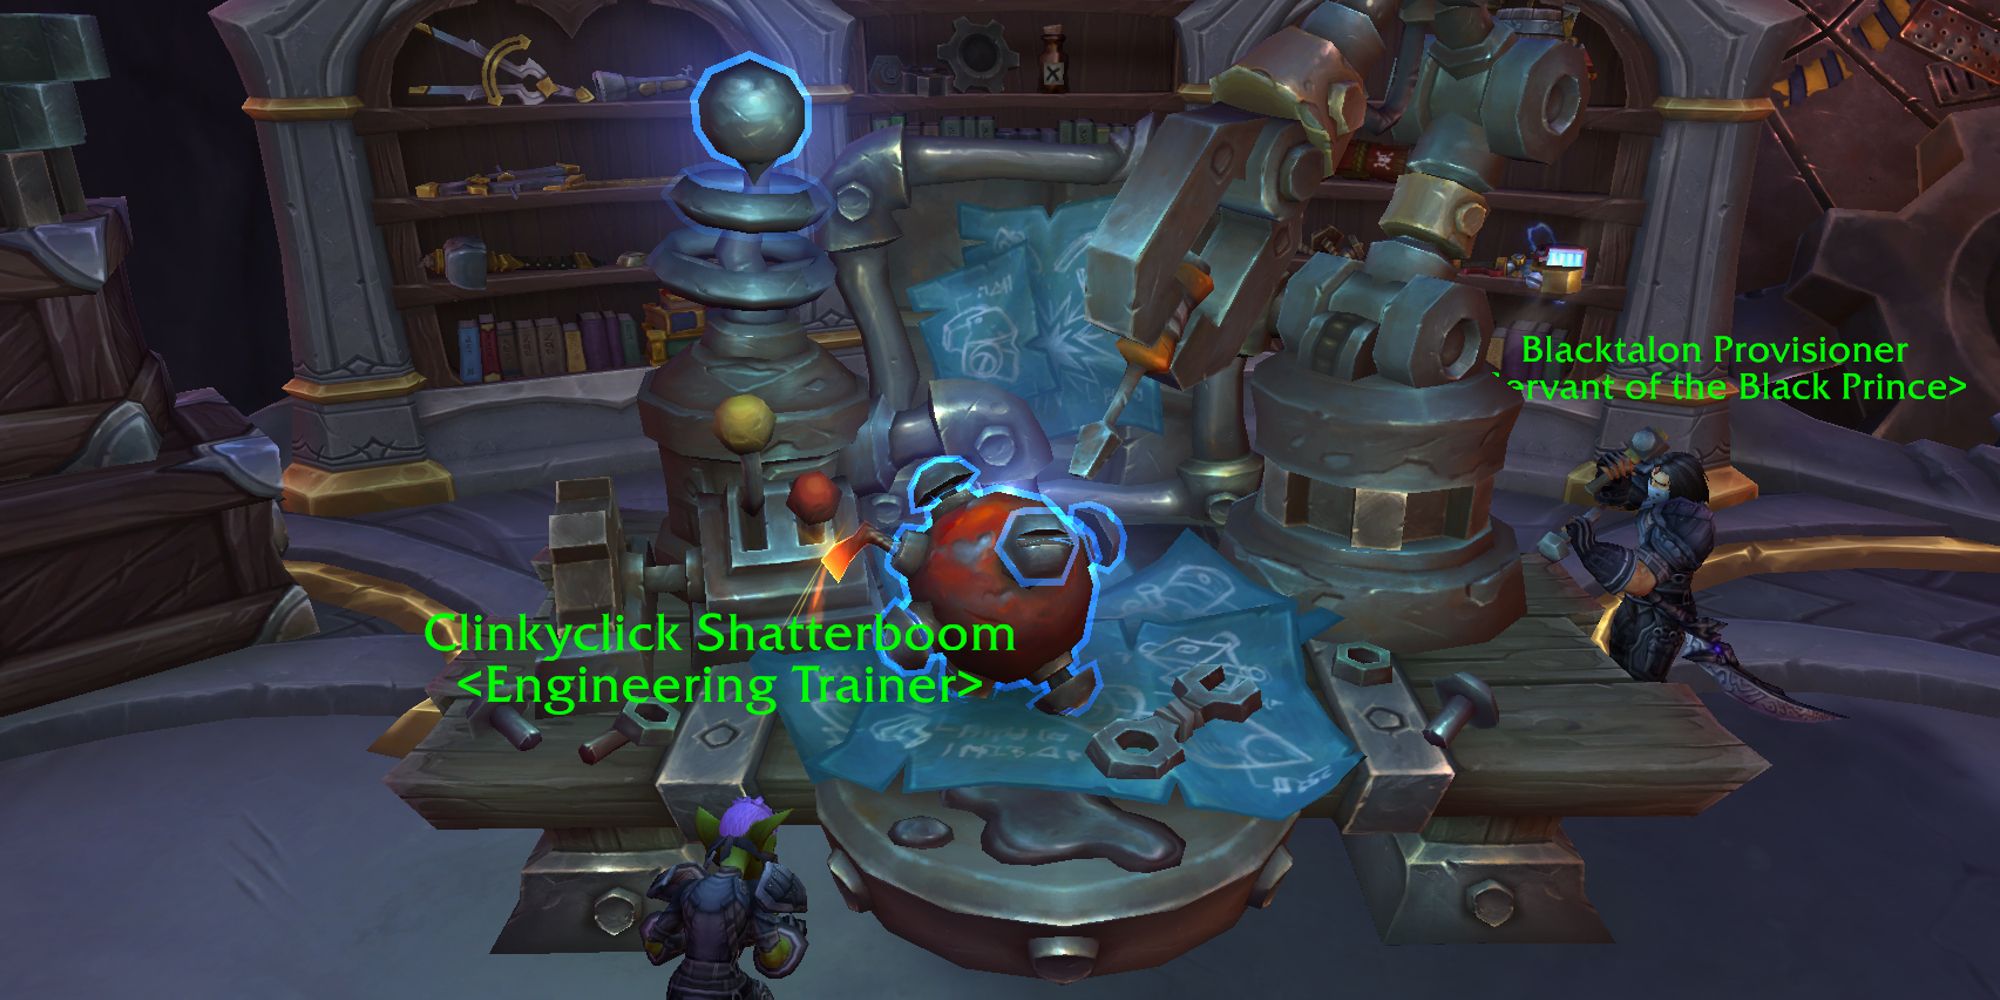 Engineer workbench as seen in World of Warcraft Dragonflight